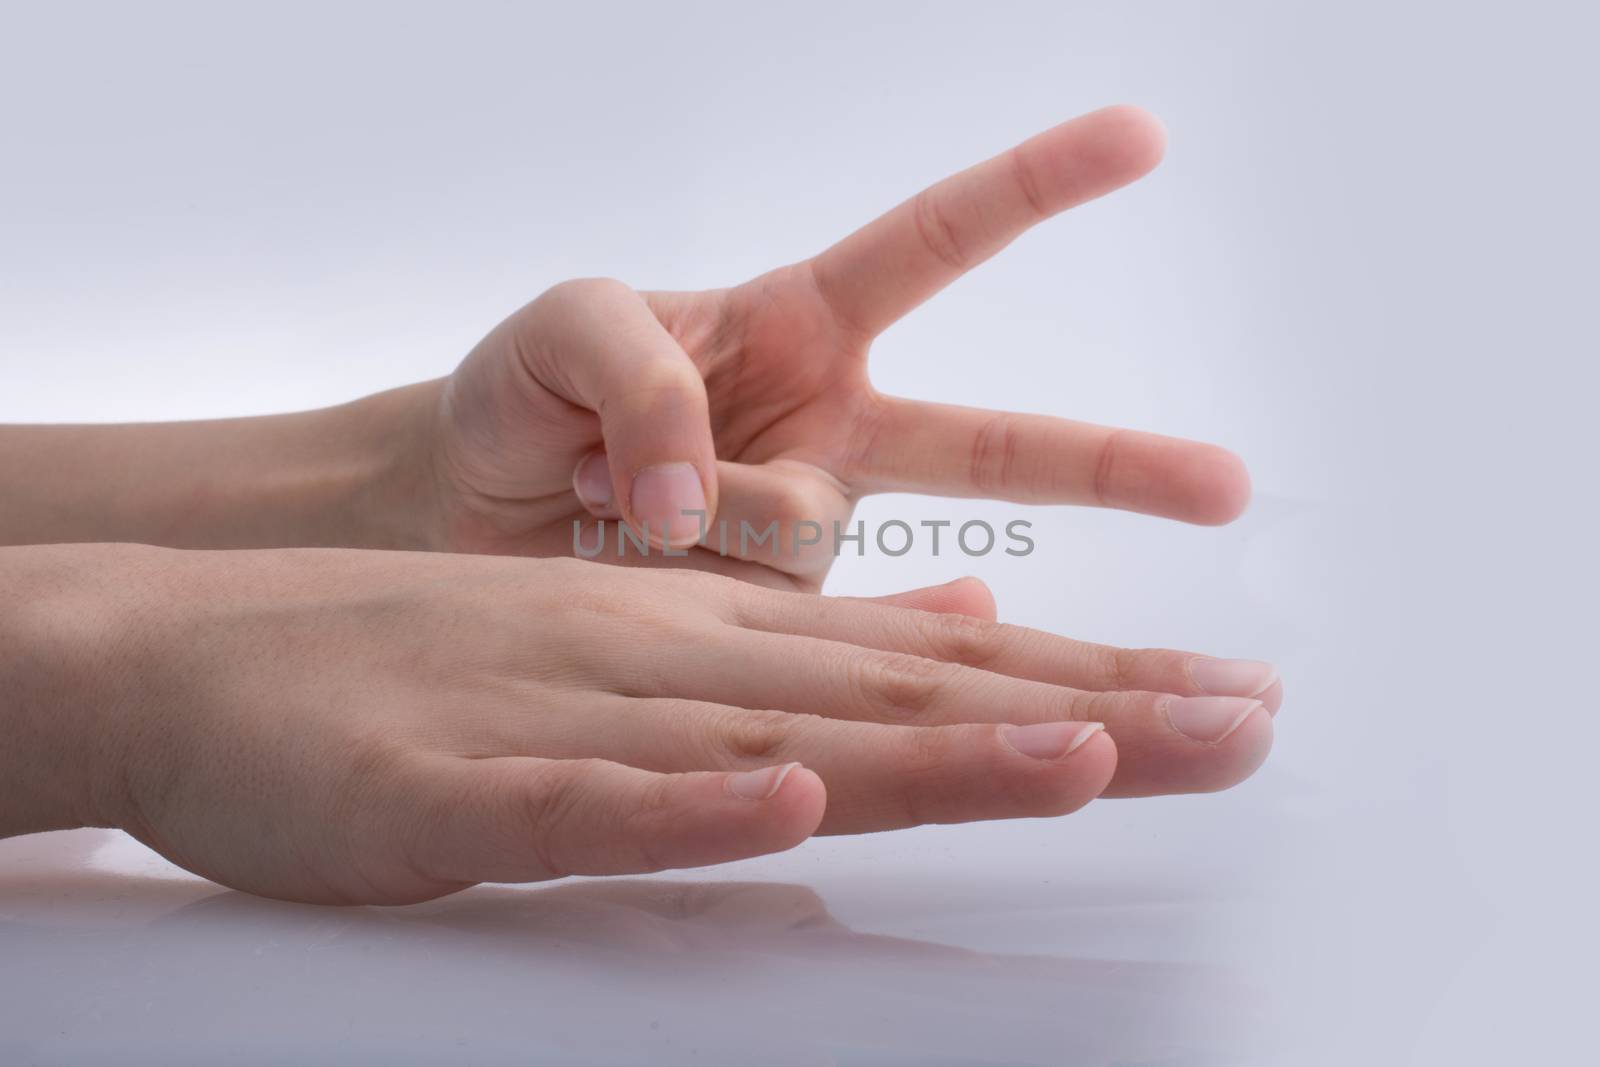 Hands showing the symbols rock paper scissors